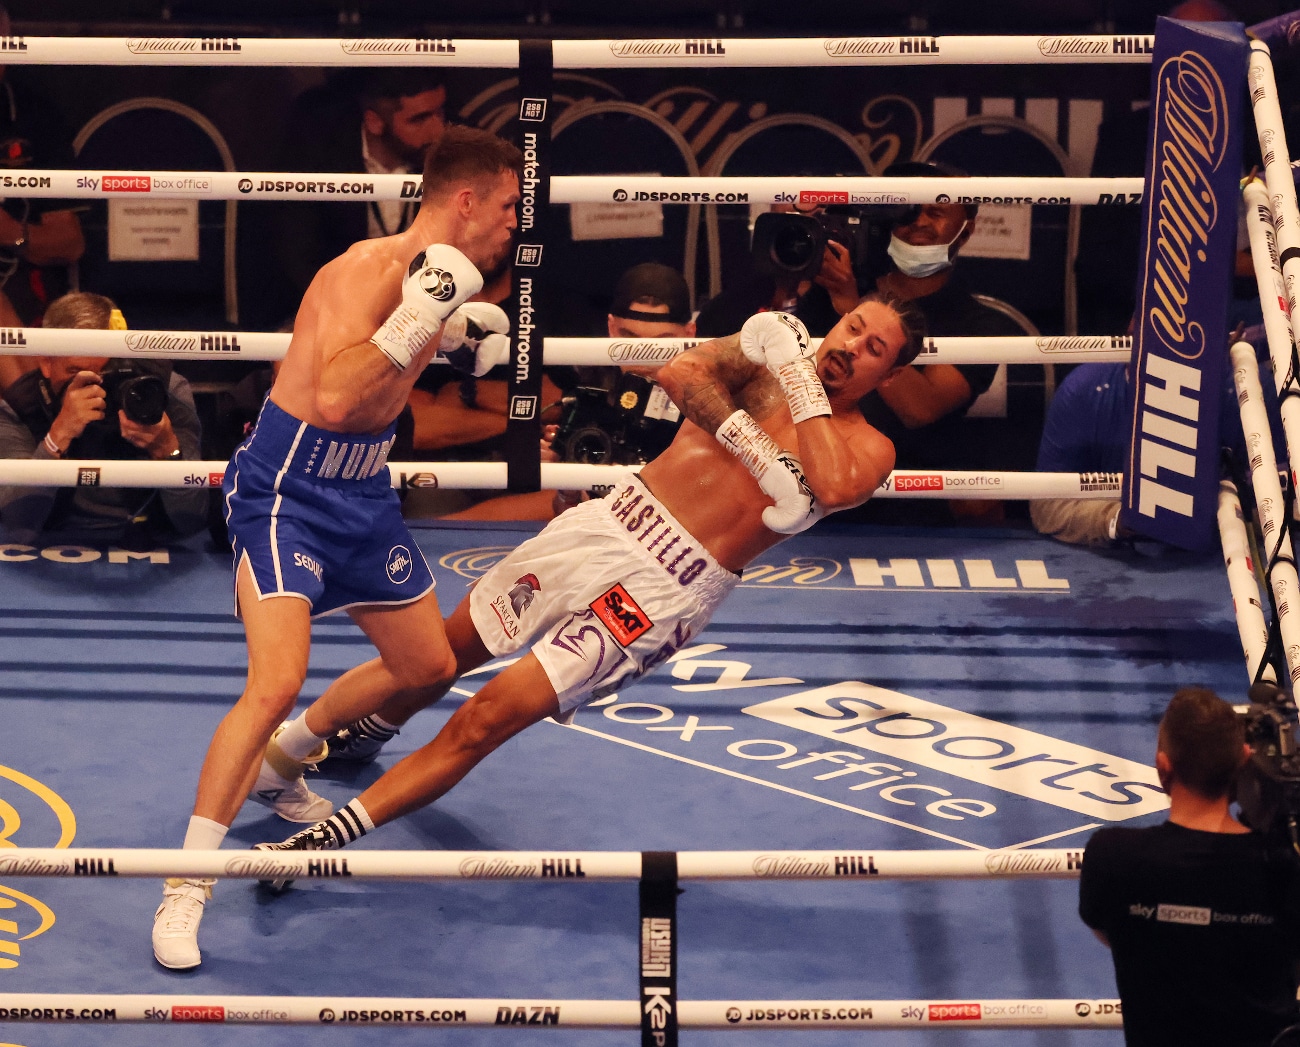 Callum Smith boxing image / photo